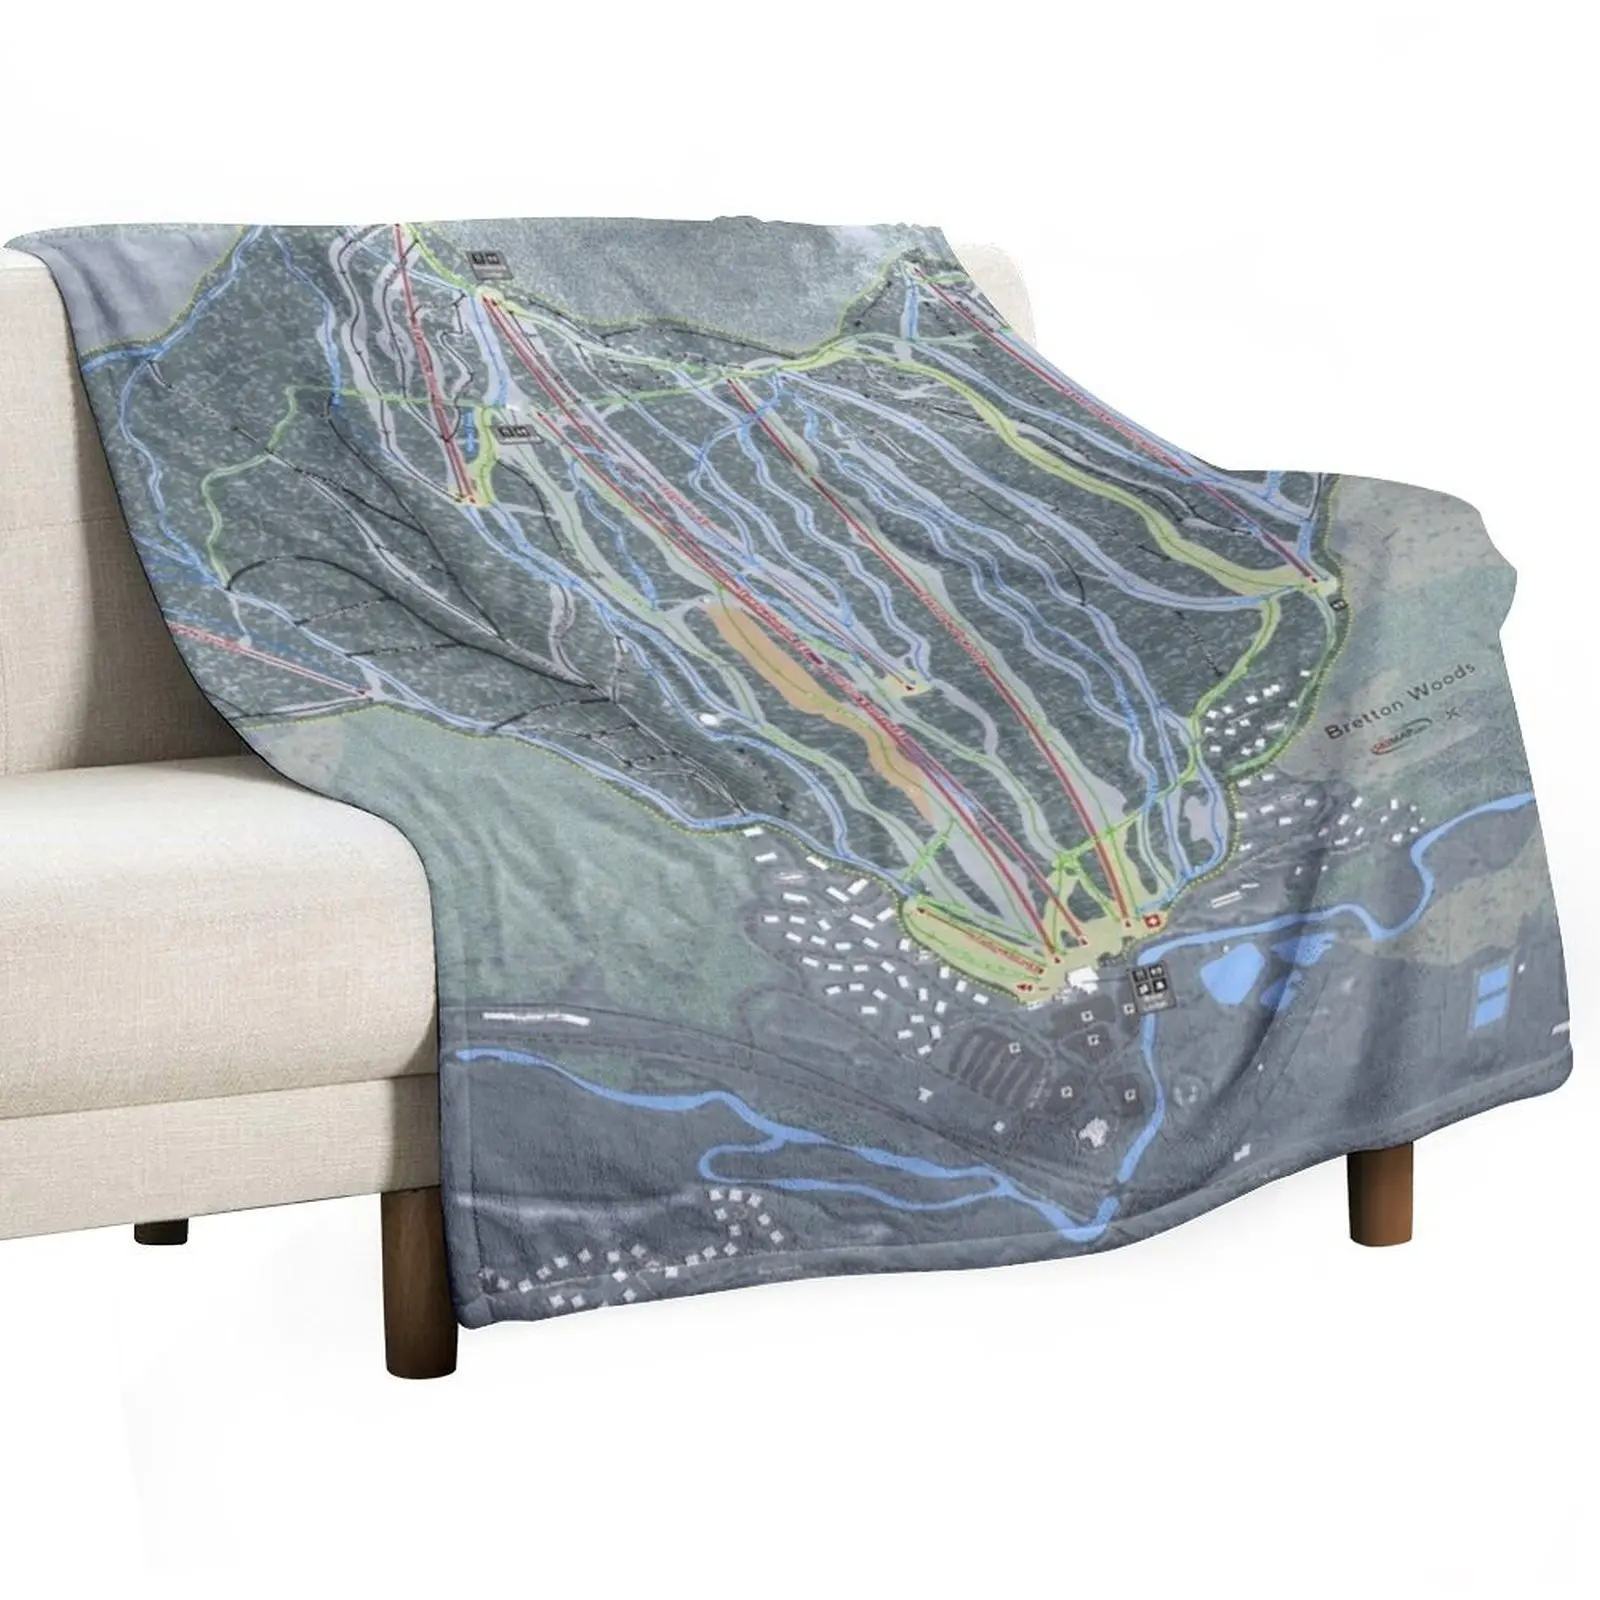 

Bretton Woods Resort Trail Map Throw Blanket For Sofa Thin Decorative Throw Blankets